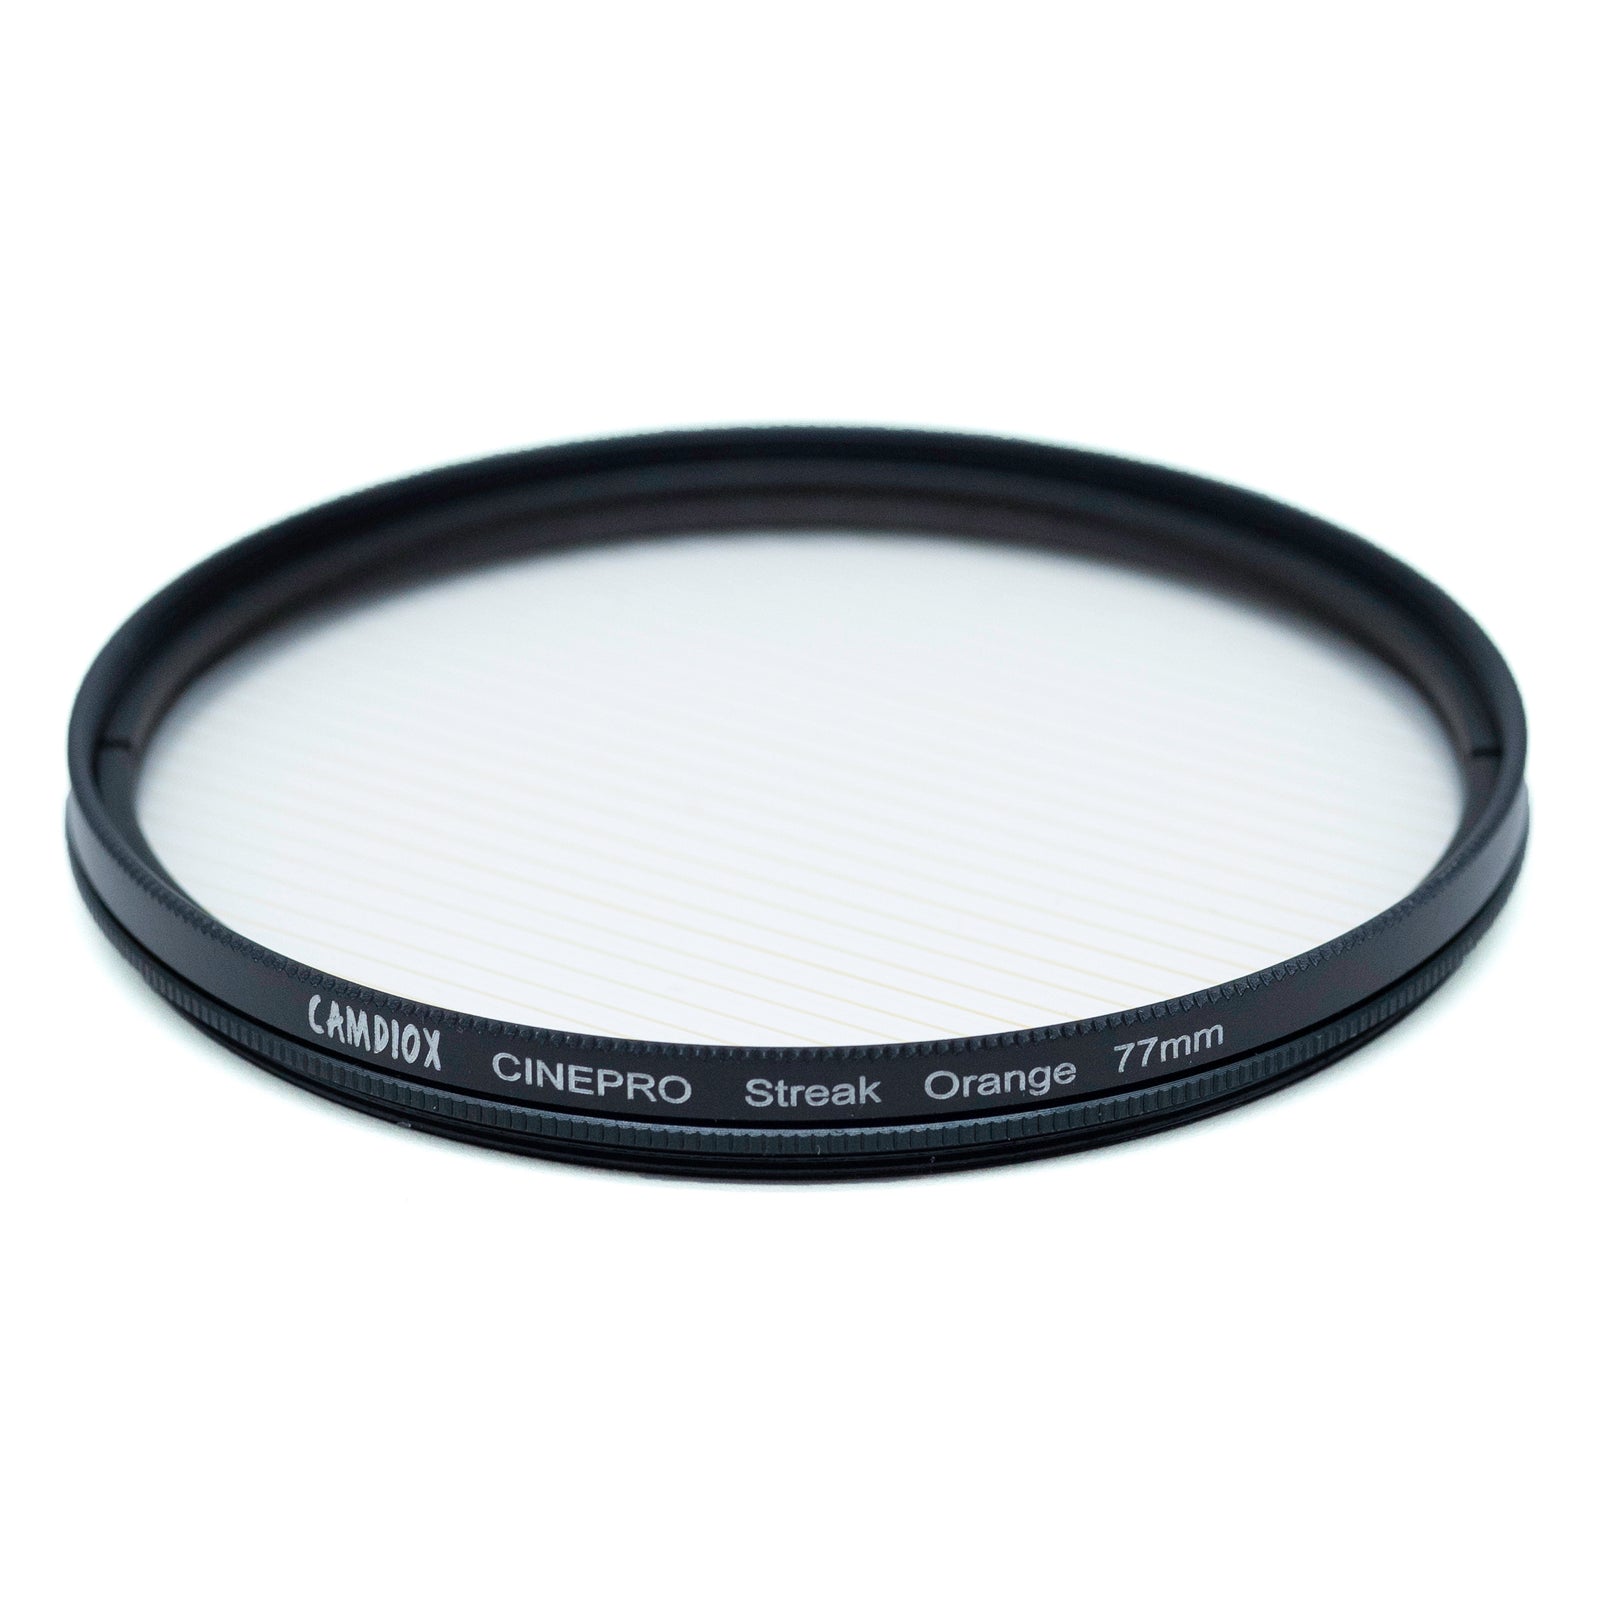 Camdiox Cinepro Pro Filter - Orange Streak - starlight filter for Canon Nikon Sony Olympus Leica DSLR mirrorless camera lenses